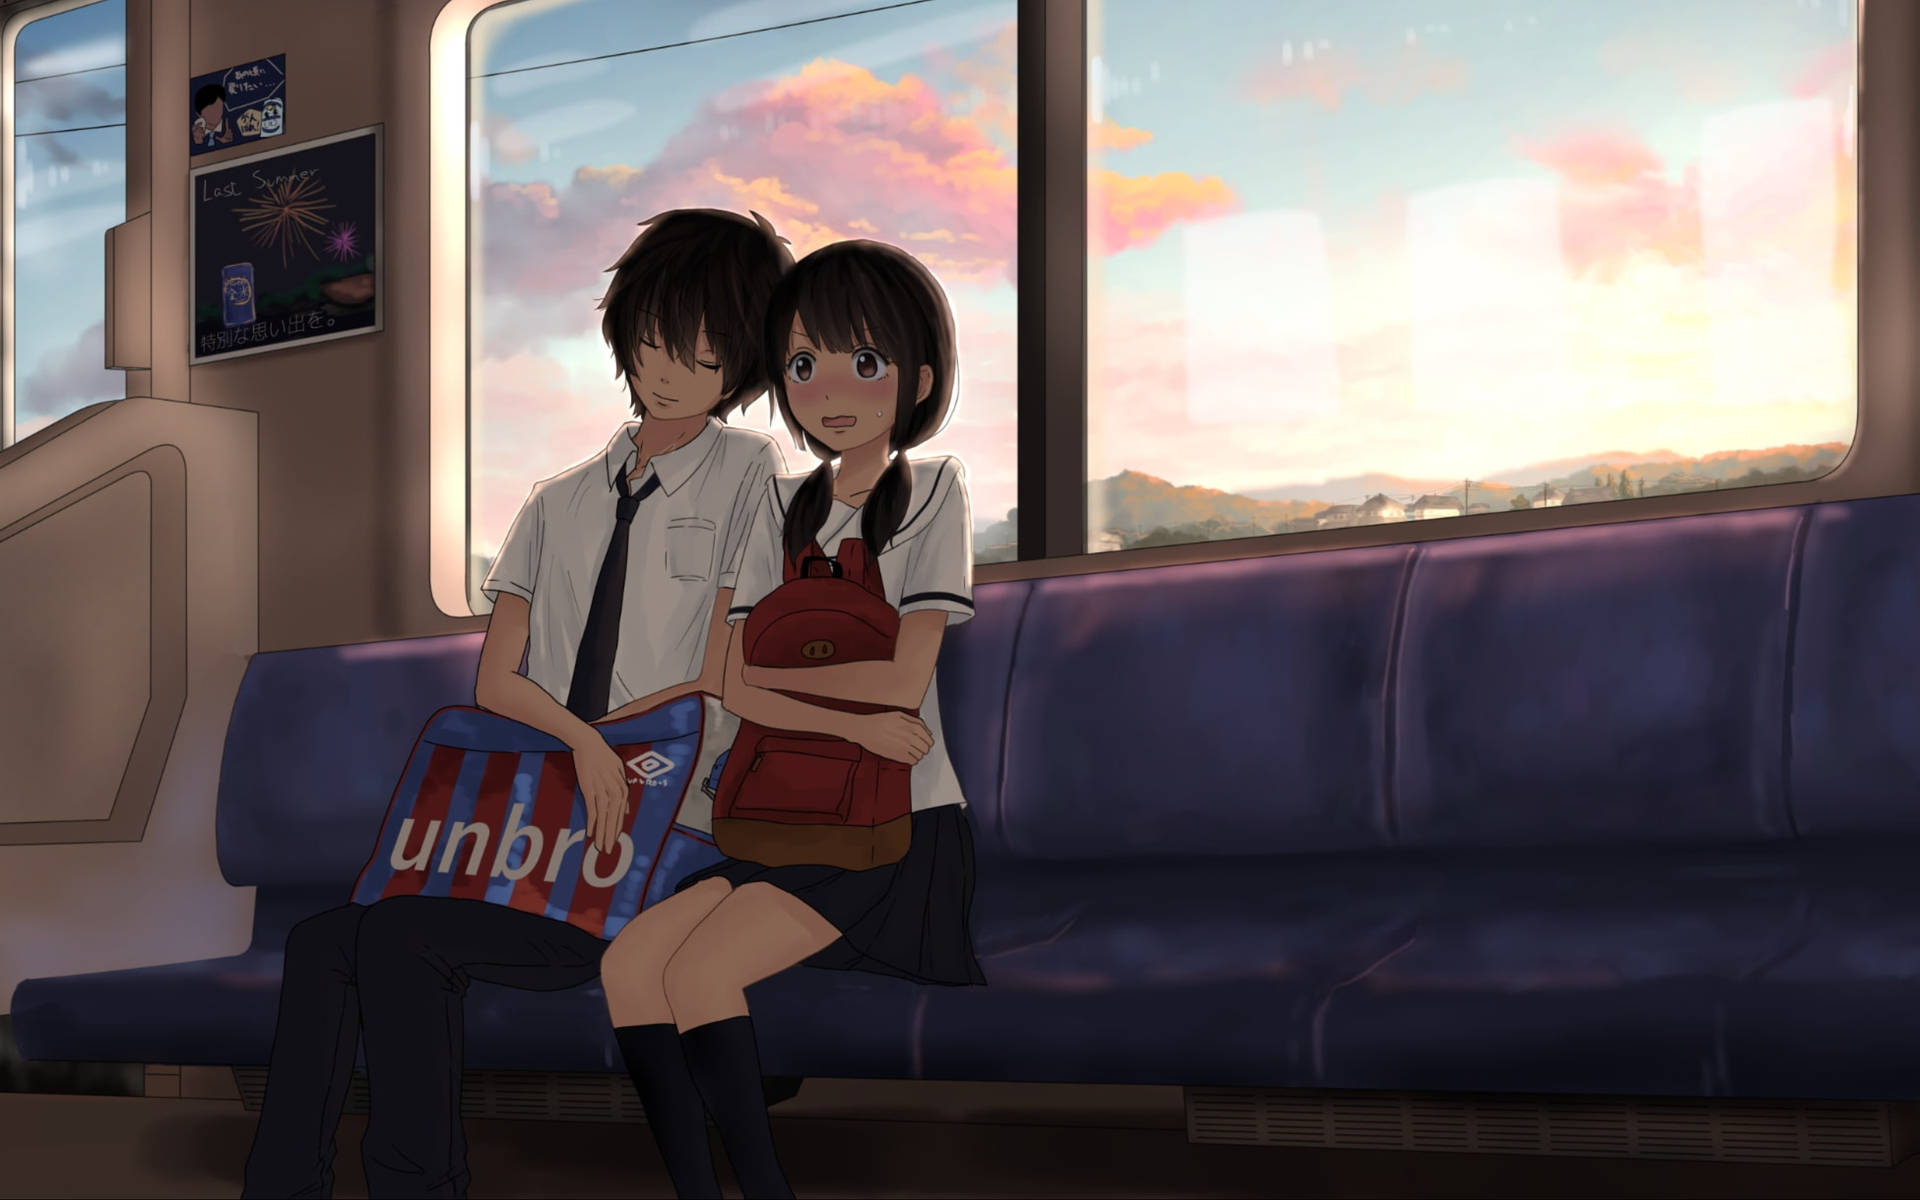 Cute Anime Couple In Train